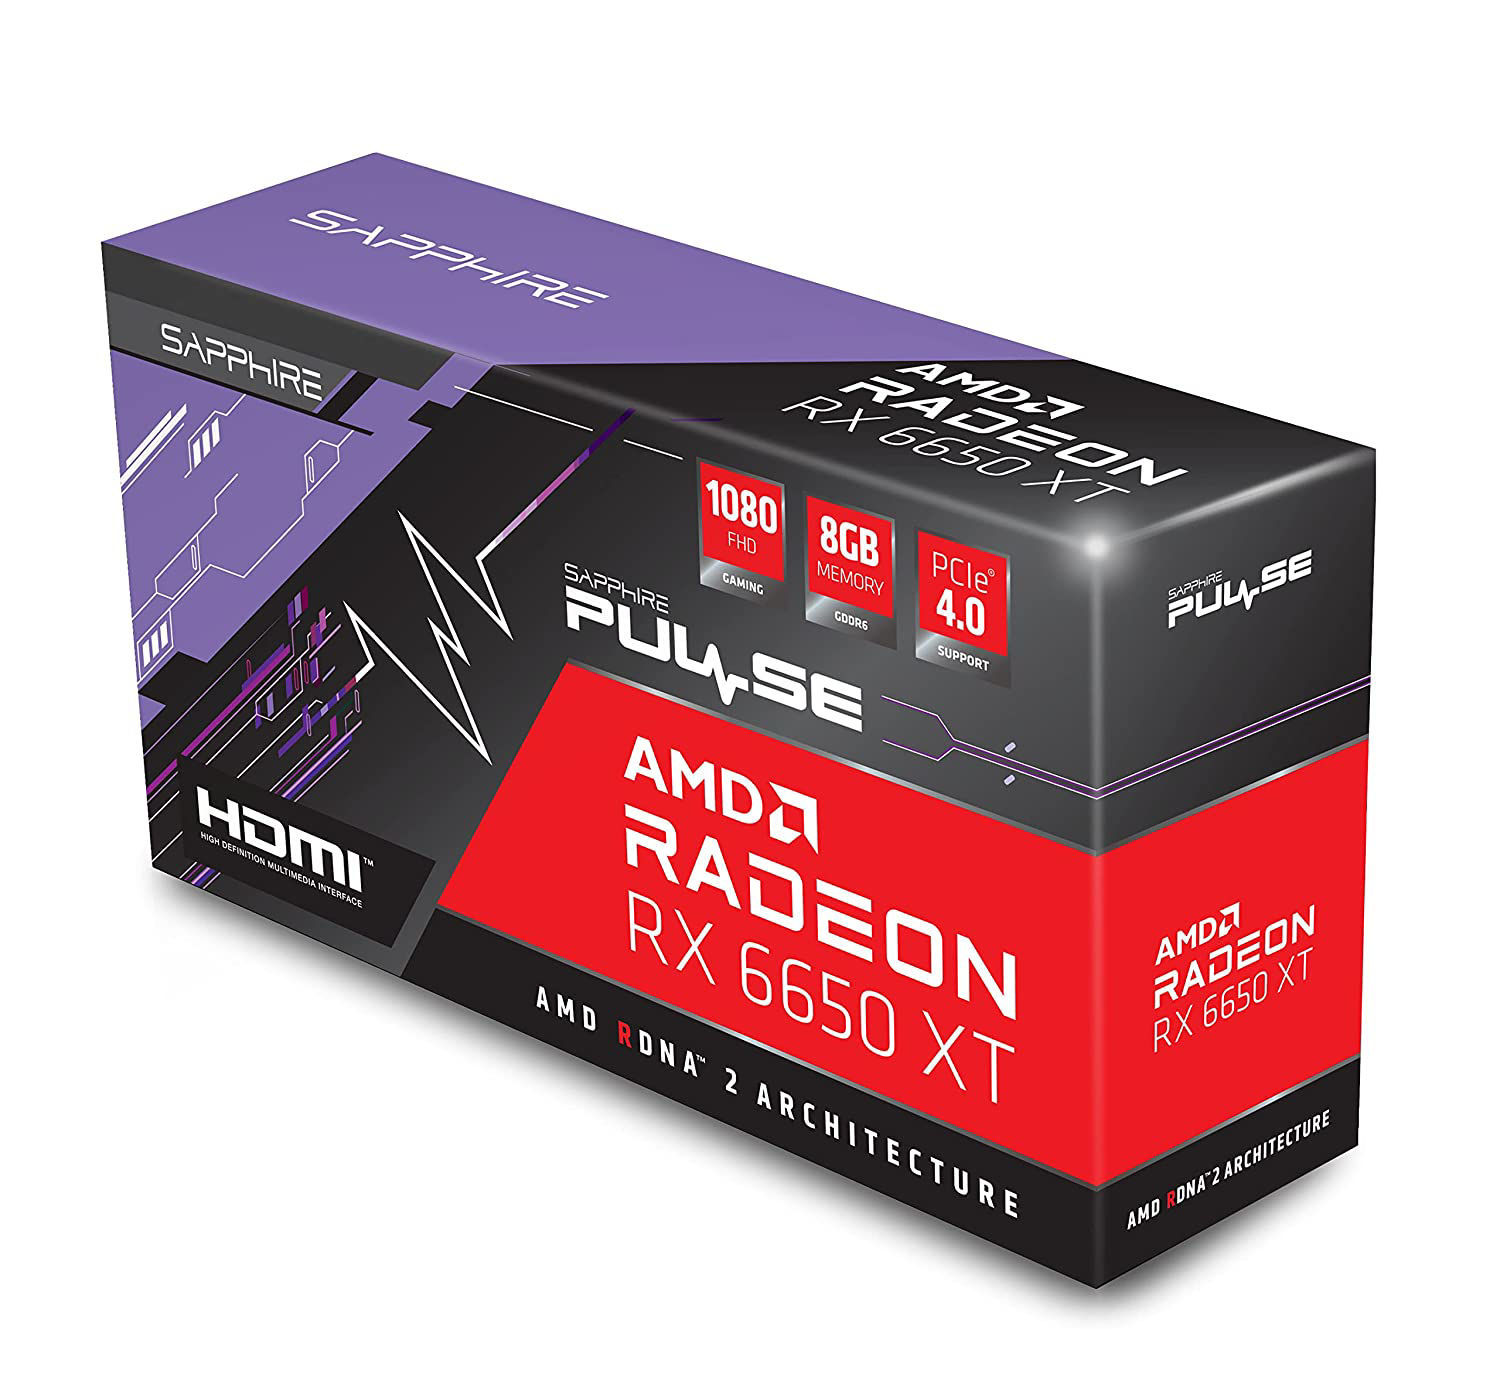 Sapphire Pulse AMD Radeon RX 6650 XT pci_e_x16 Graphic Card with 8